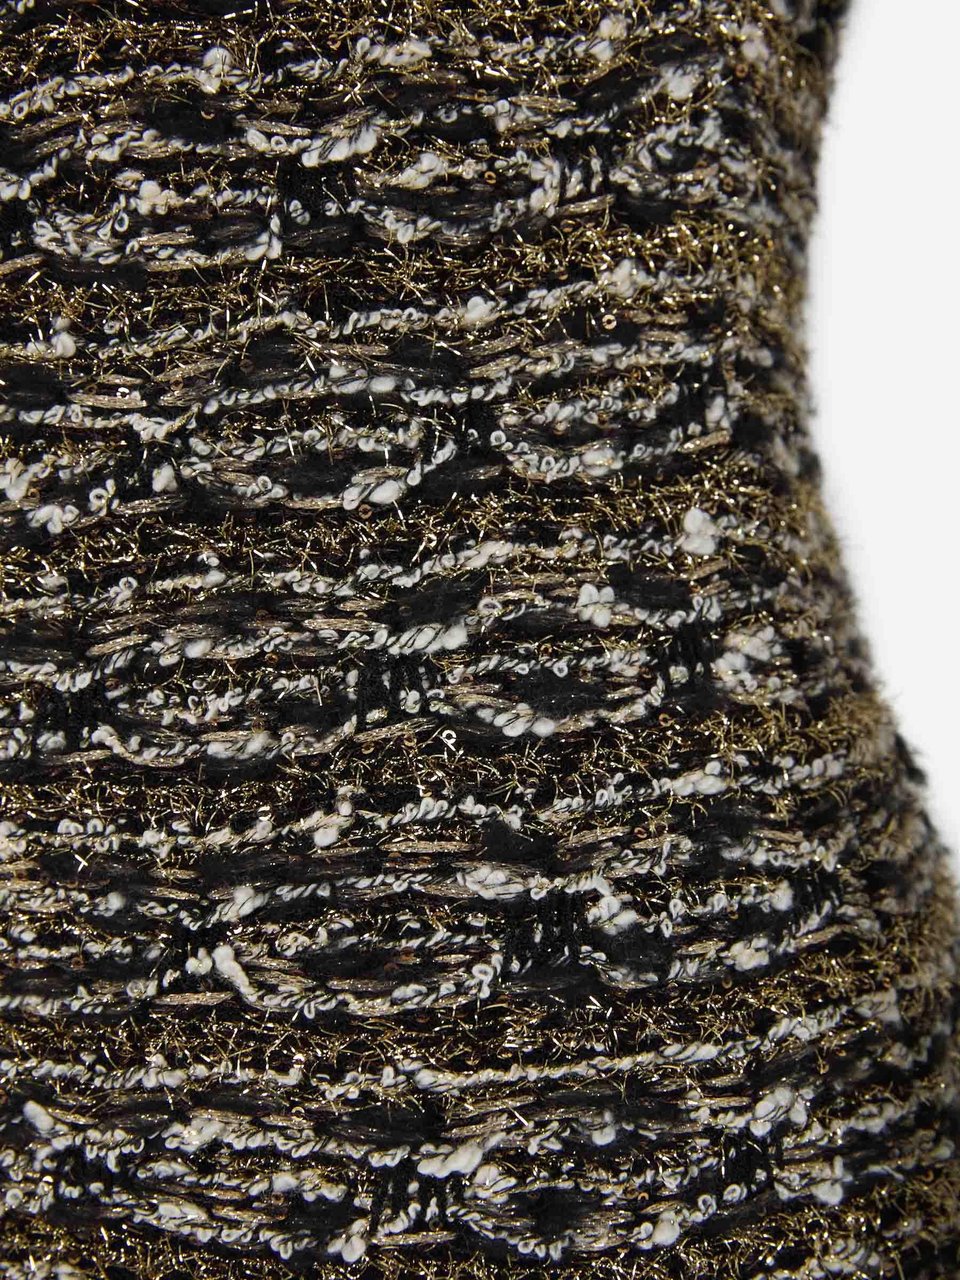 Balmain Mini Tweed Dress Goud